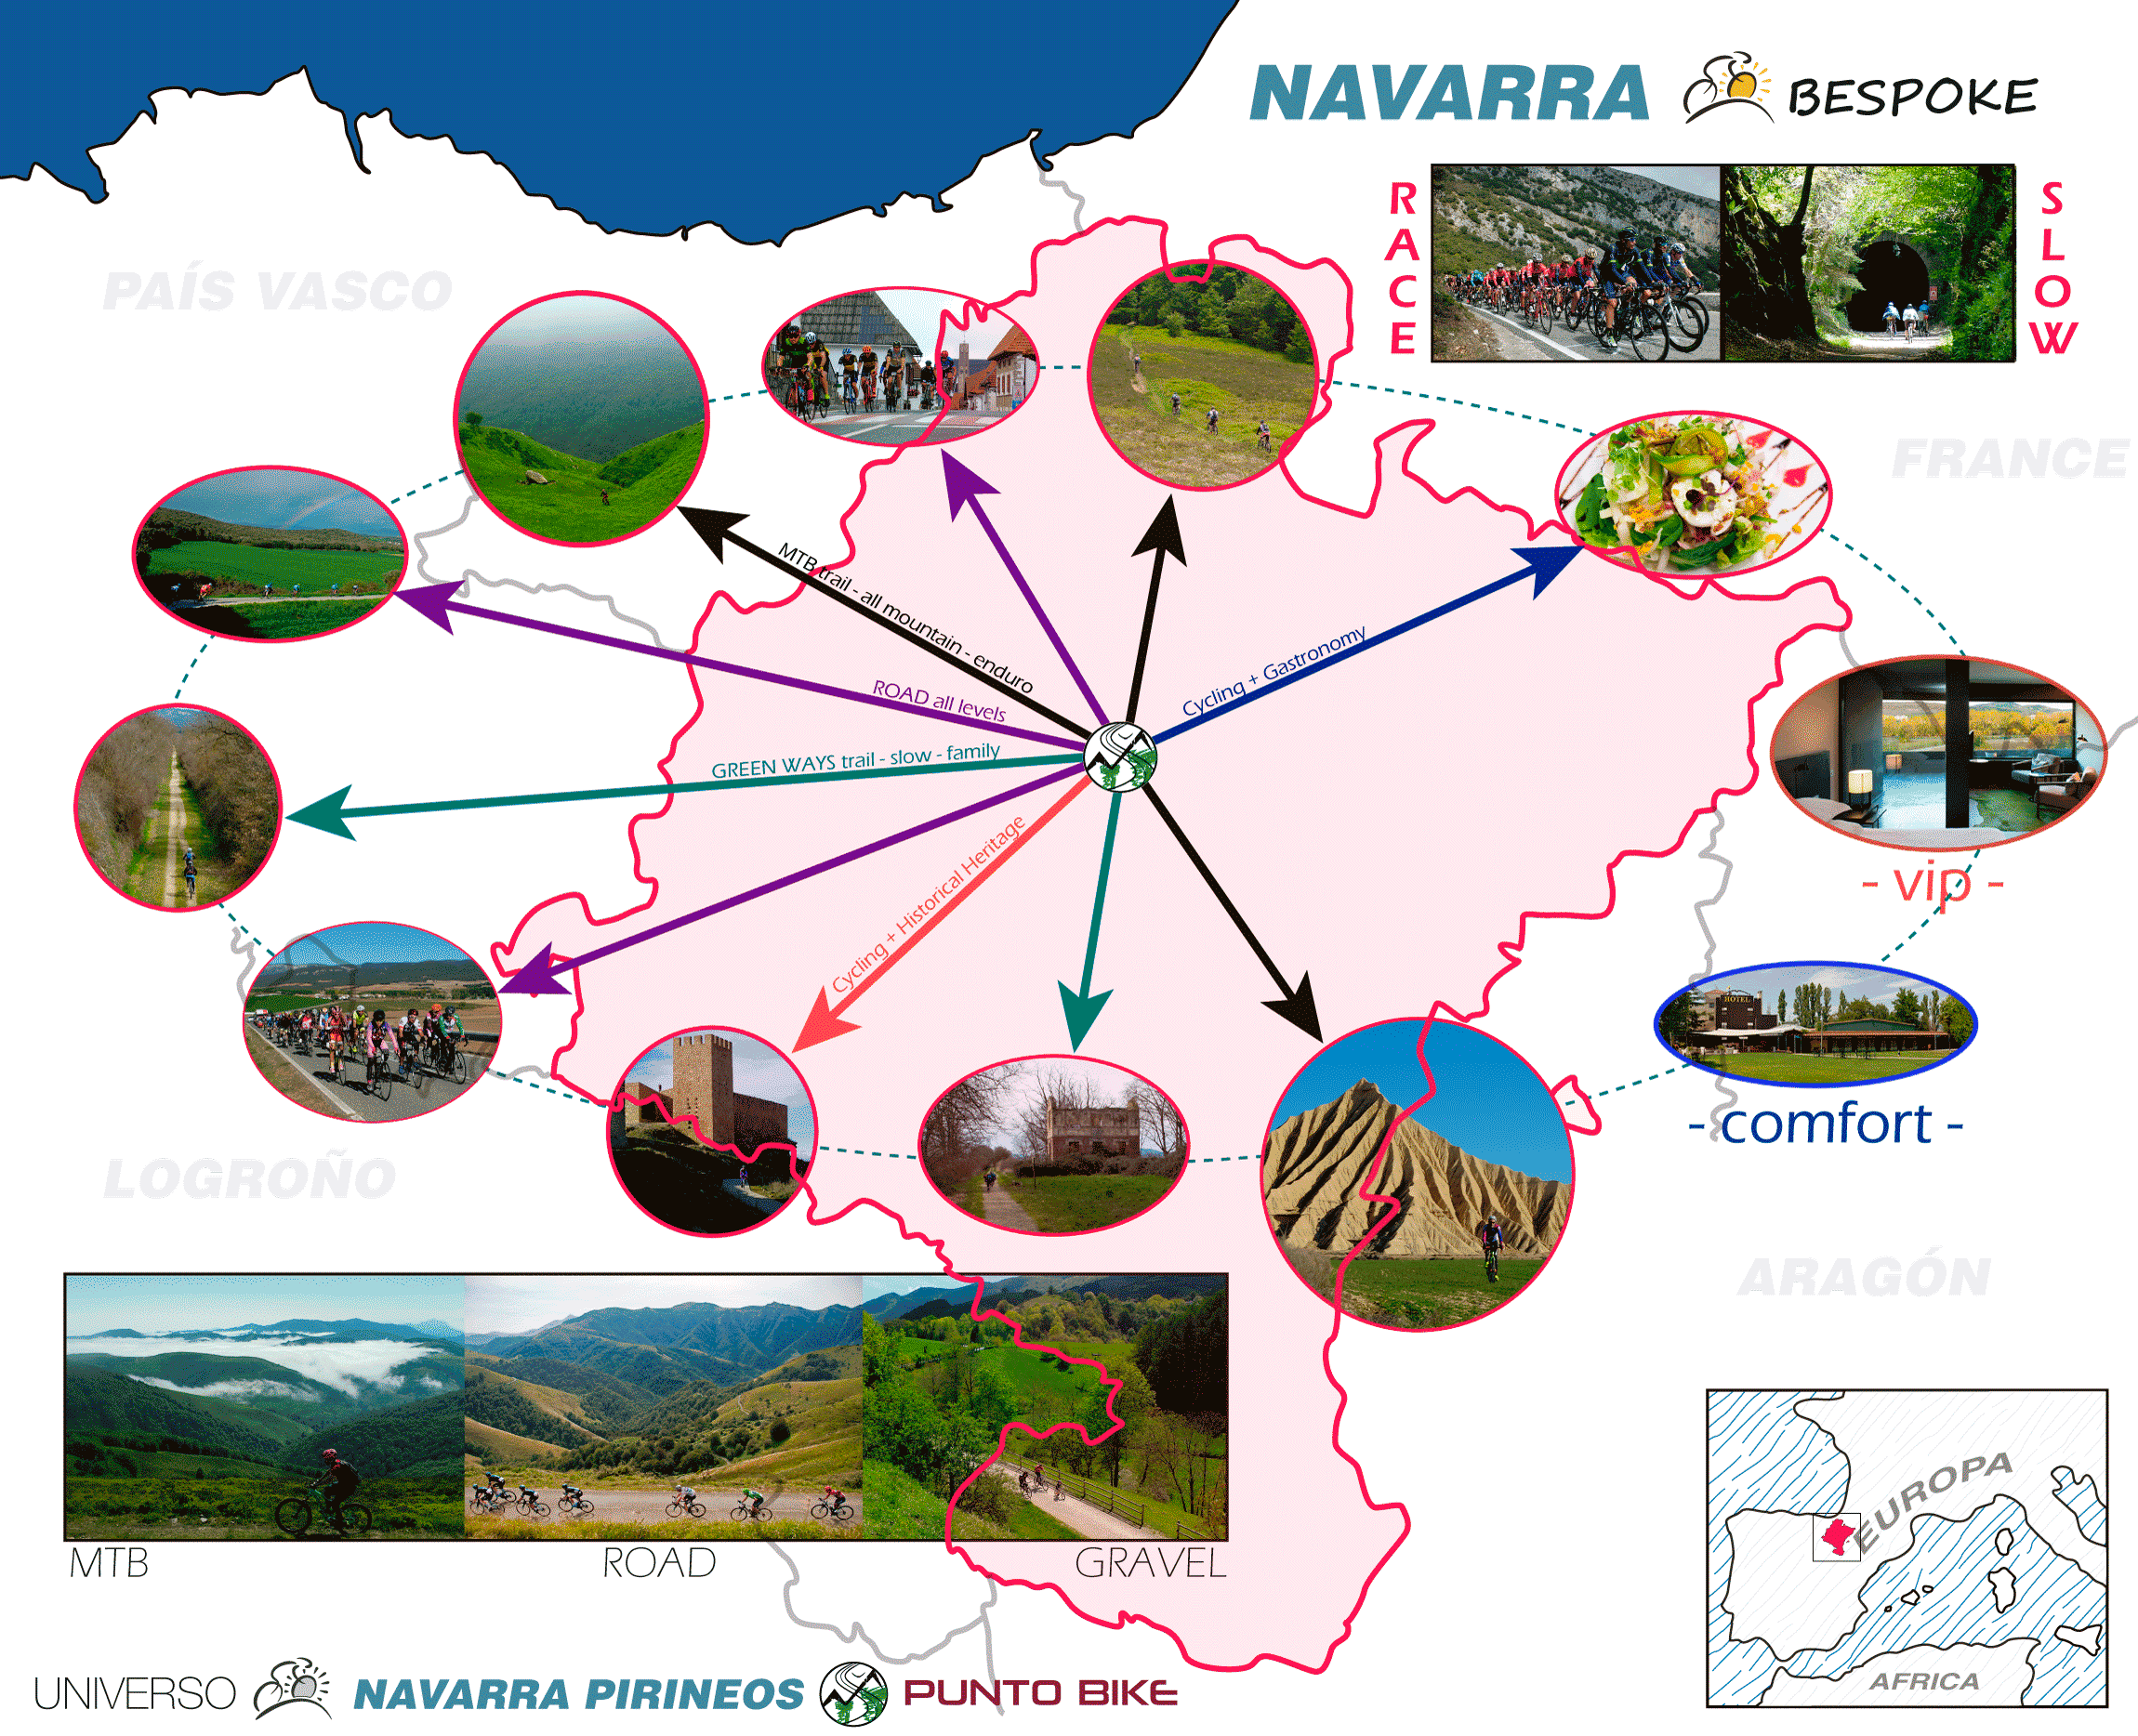 Map-Navarra-bespoke